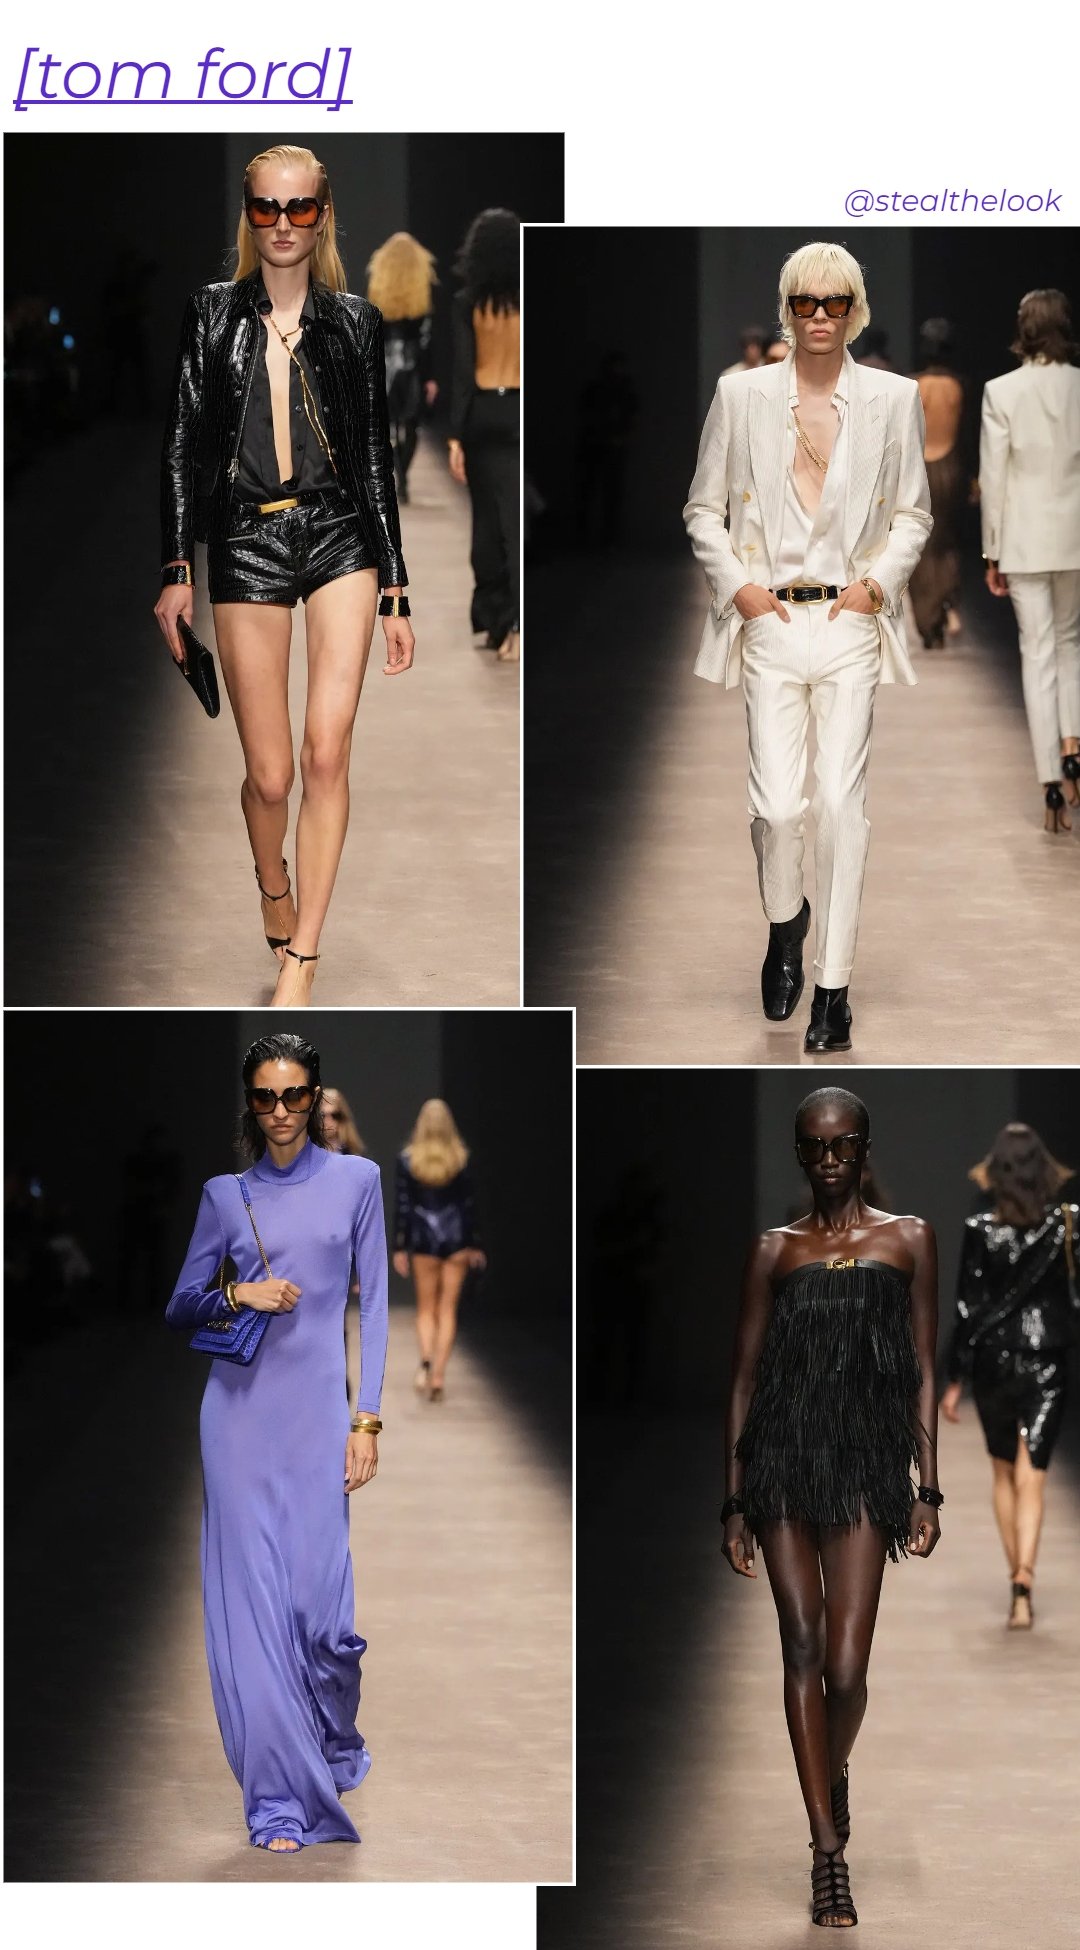 Tom Ford - roupas diversas - Milano Fashion Week - primavera - colagem de imagens - https://stealthelook.com.br